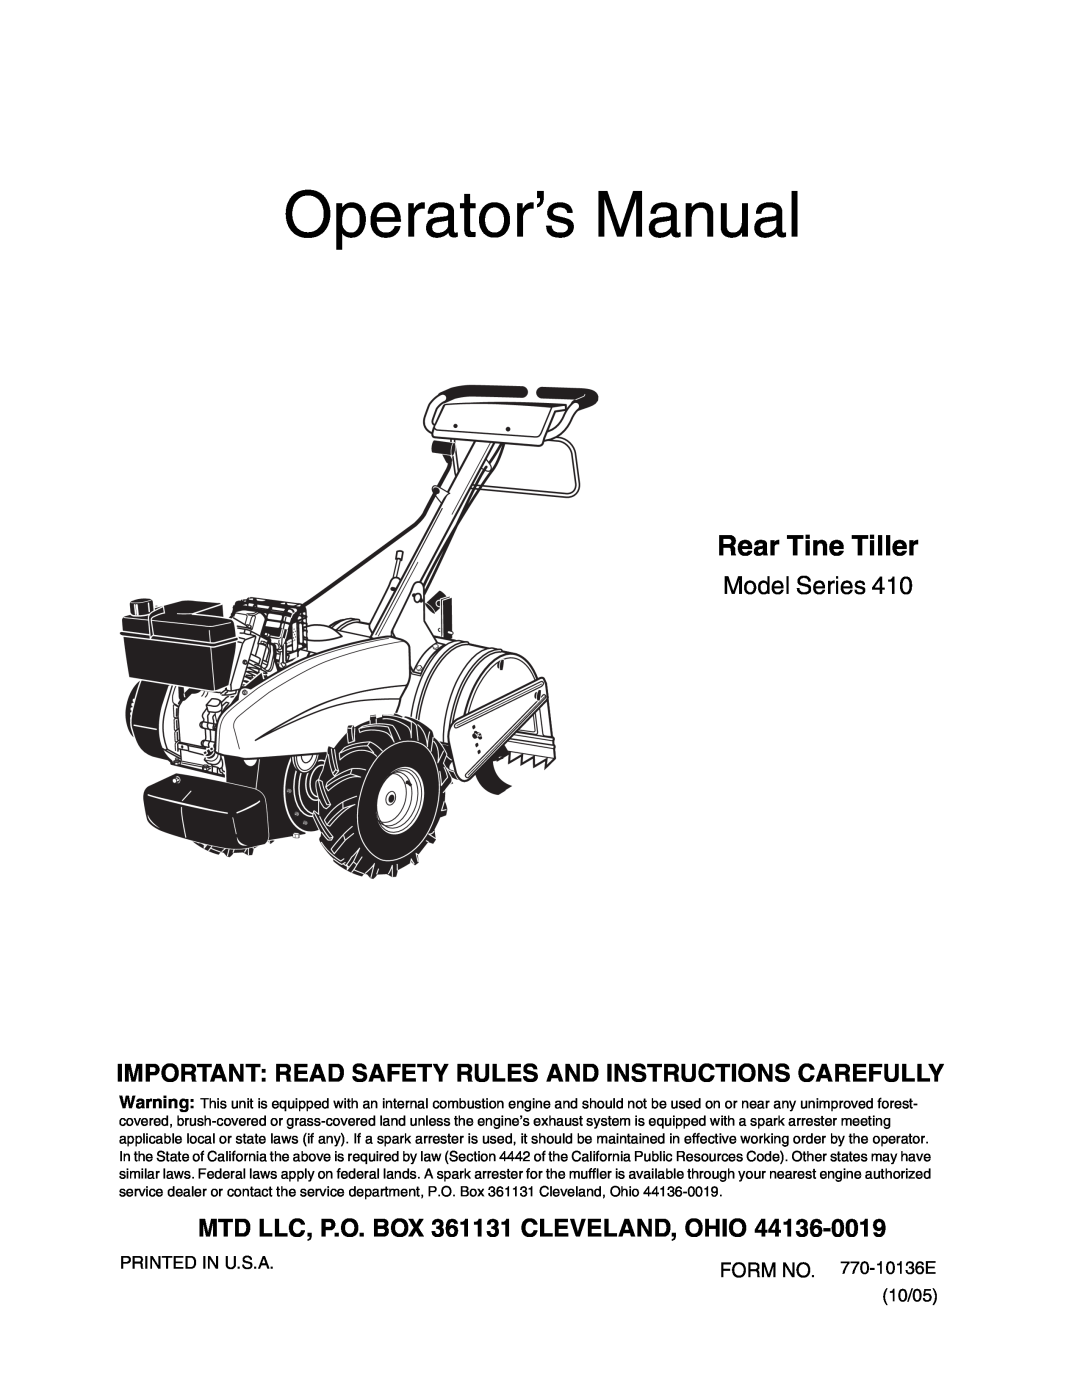 MTD 410 Series manual Operator’s Manual, Rear Tine Tiller, Model Series, MTD LLC, P.O. BOX 361131 CLEVELAND, OHIO 